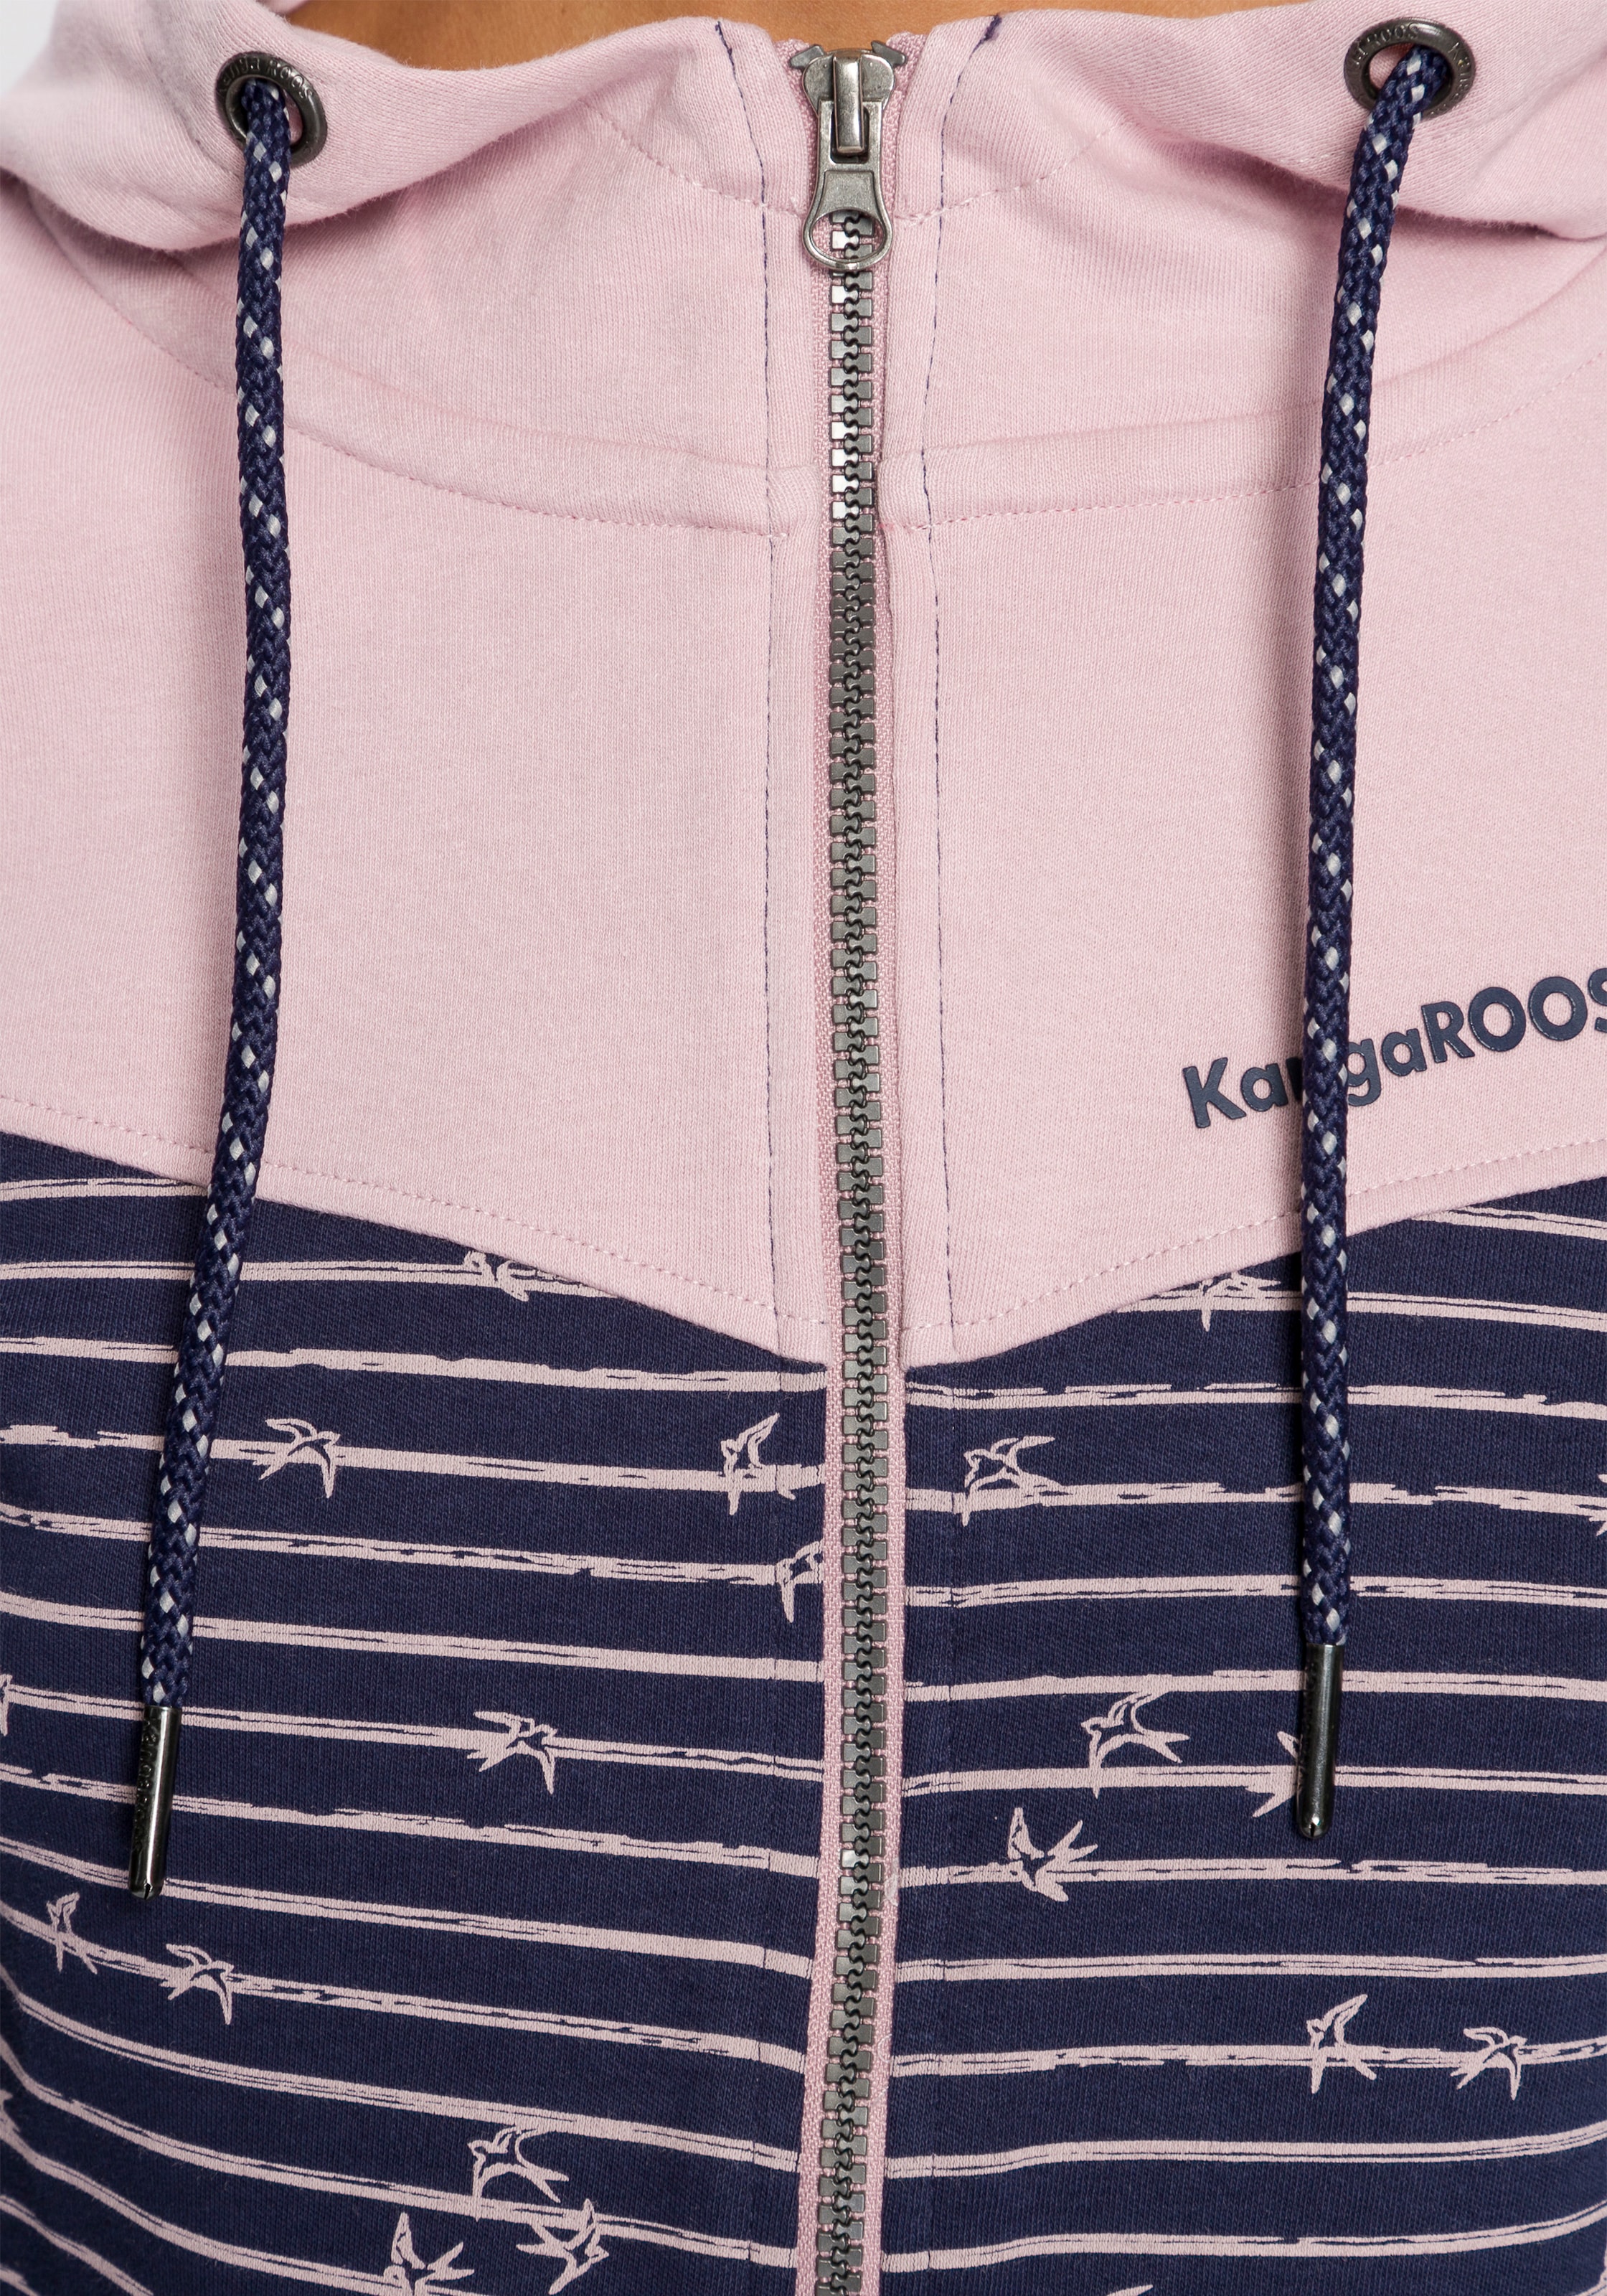 KangaROOS auf im Uni-Alloverdruck-Mix Colourblocking Kapuzensweatjacke, mit versandkostenfrei